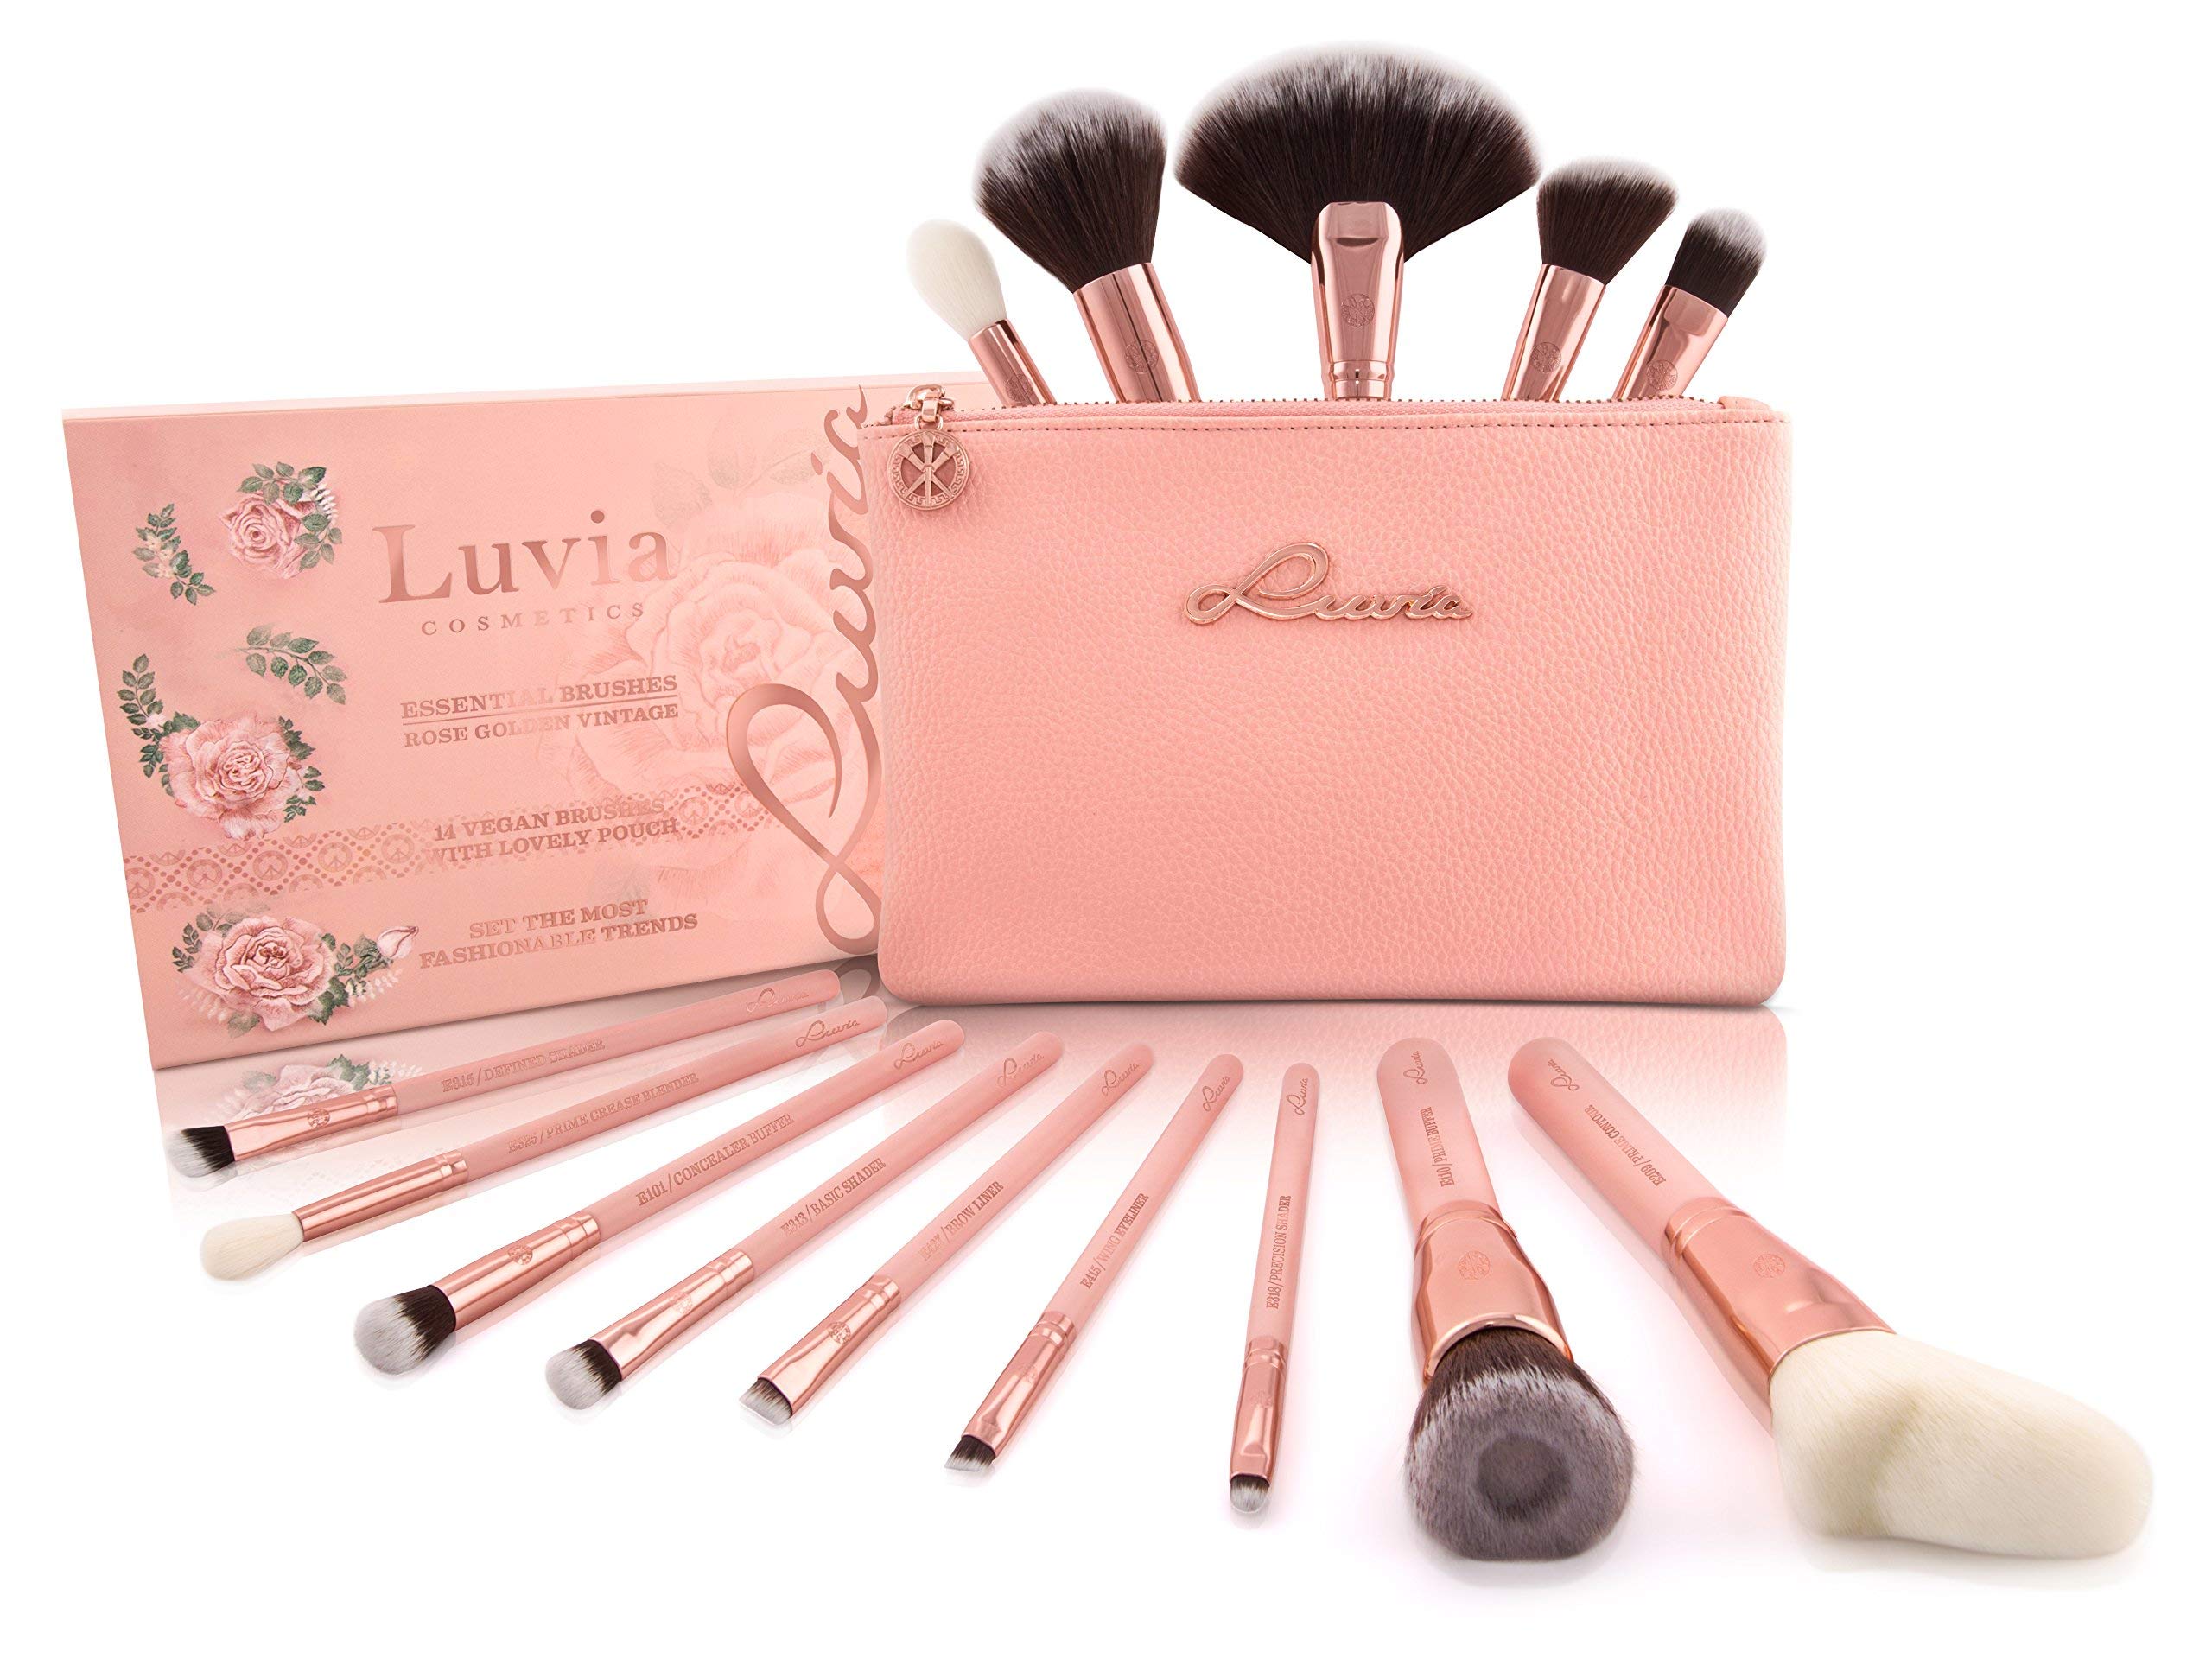 Luvia Makeup Pinsel Set inkl. Kosmetiktasche für Schminke - Rose Golden Vintage Make-Up Brush Set – 14 Profi Kosmetikpinsel/Schminkpinsel in Nude/Rosegold - Geschenkidee - Vegane Kosmetik/Schminke